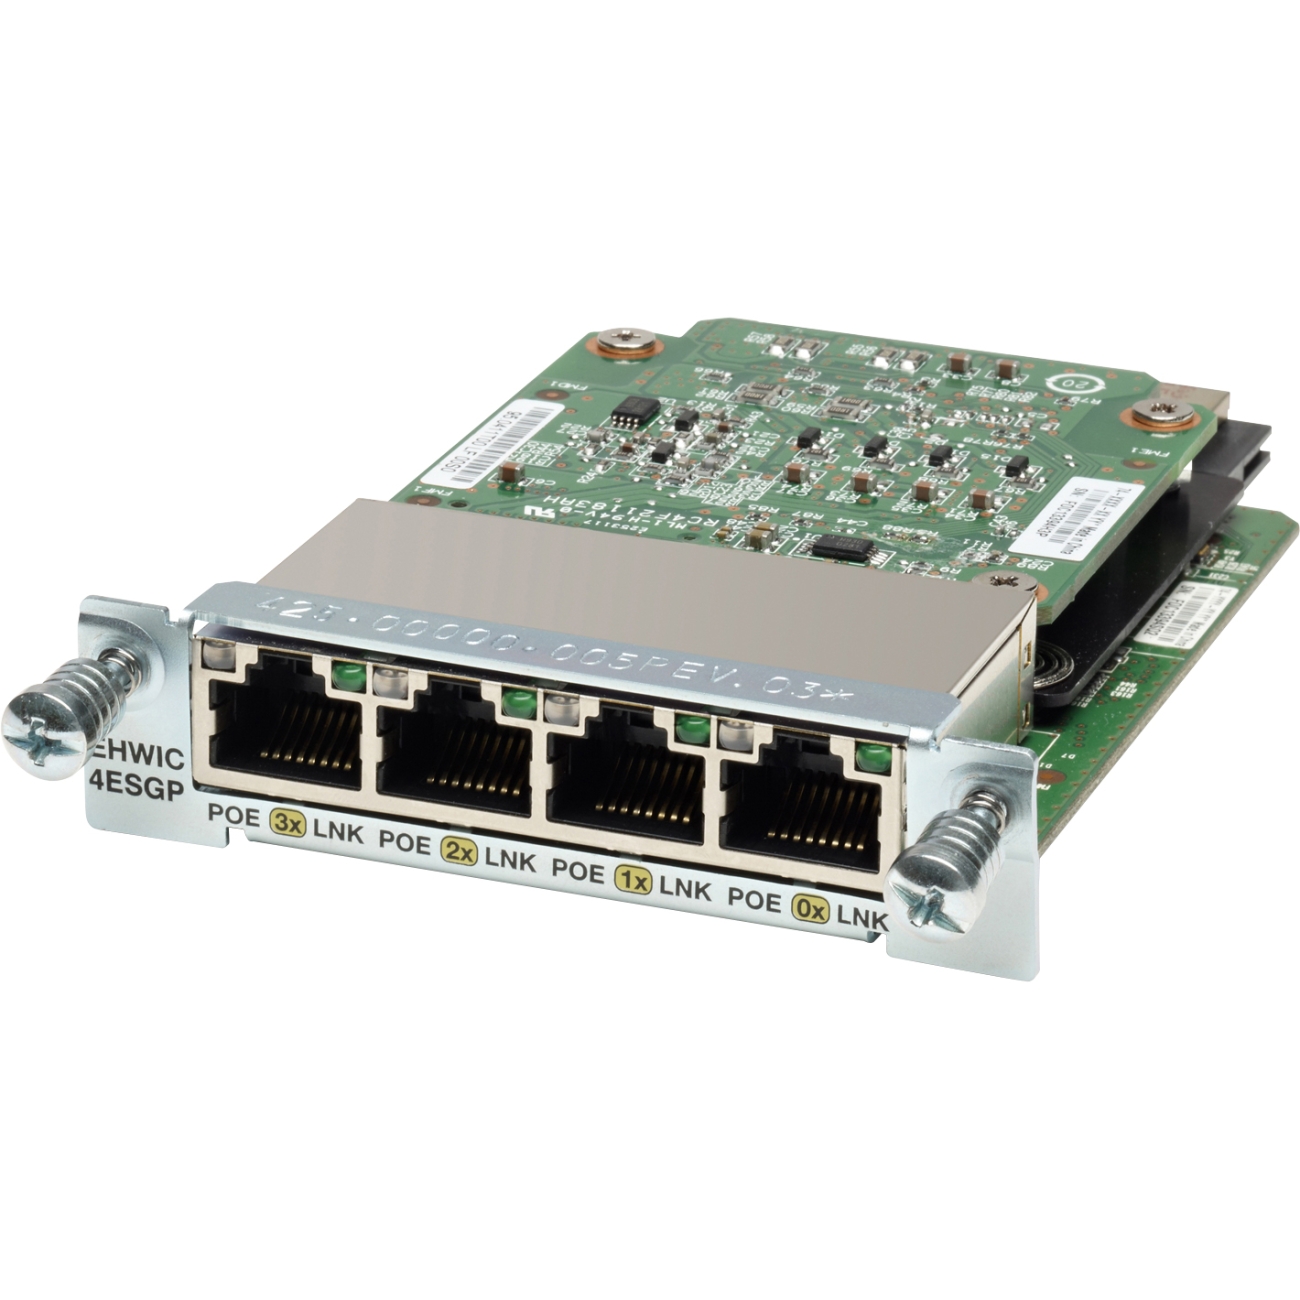 Cisco EHWIC 4ESG= 4 Port Gigabit Ethernet Enhanced High Speed WAN Interface Card